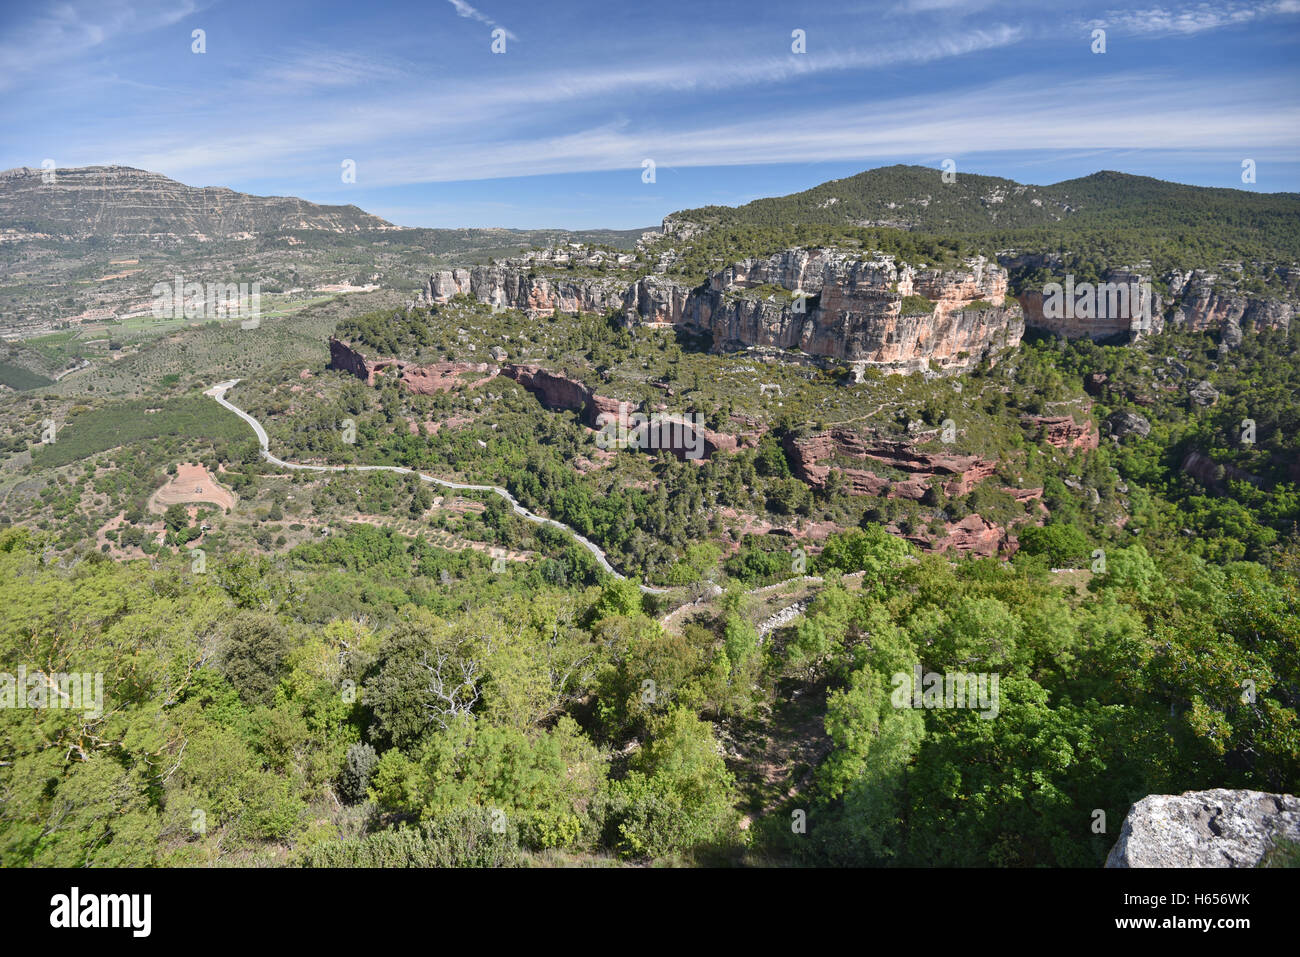 Siurana's surroundings in the Prades mountains Stock Photo